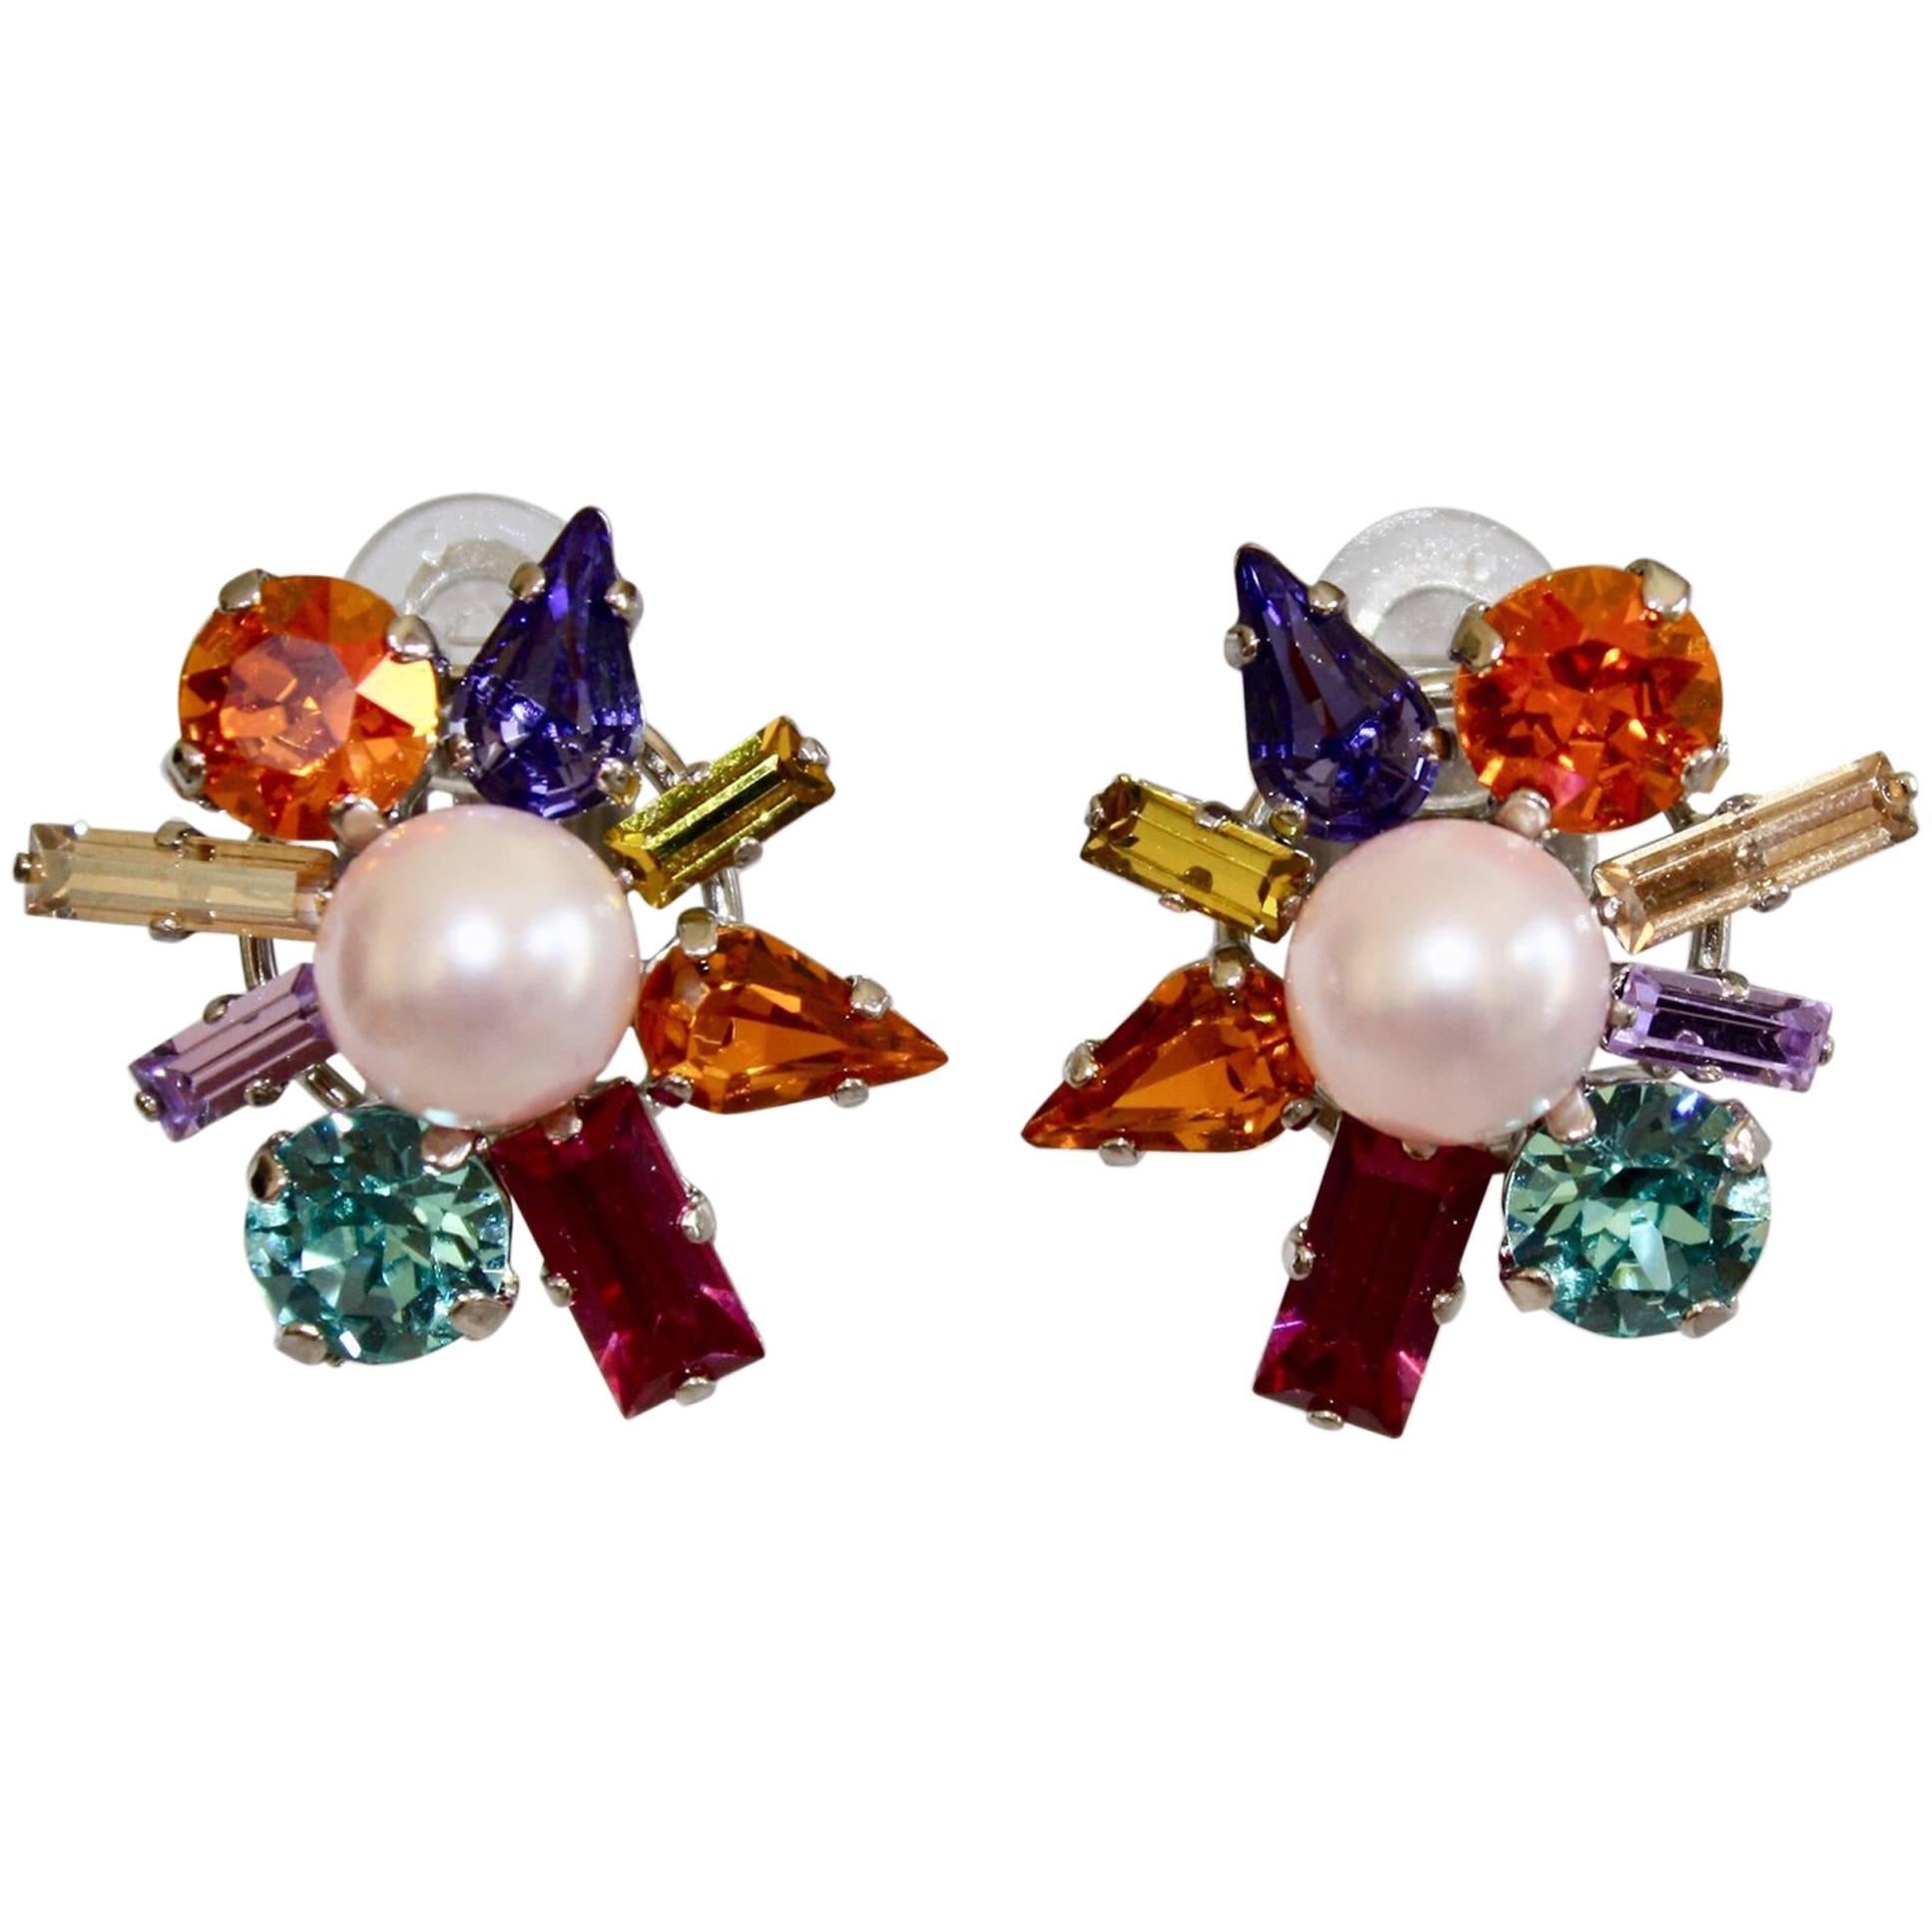 Philippe Ferrandis Arlequin Starburst Glass and Crystal Clip Earrings